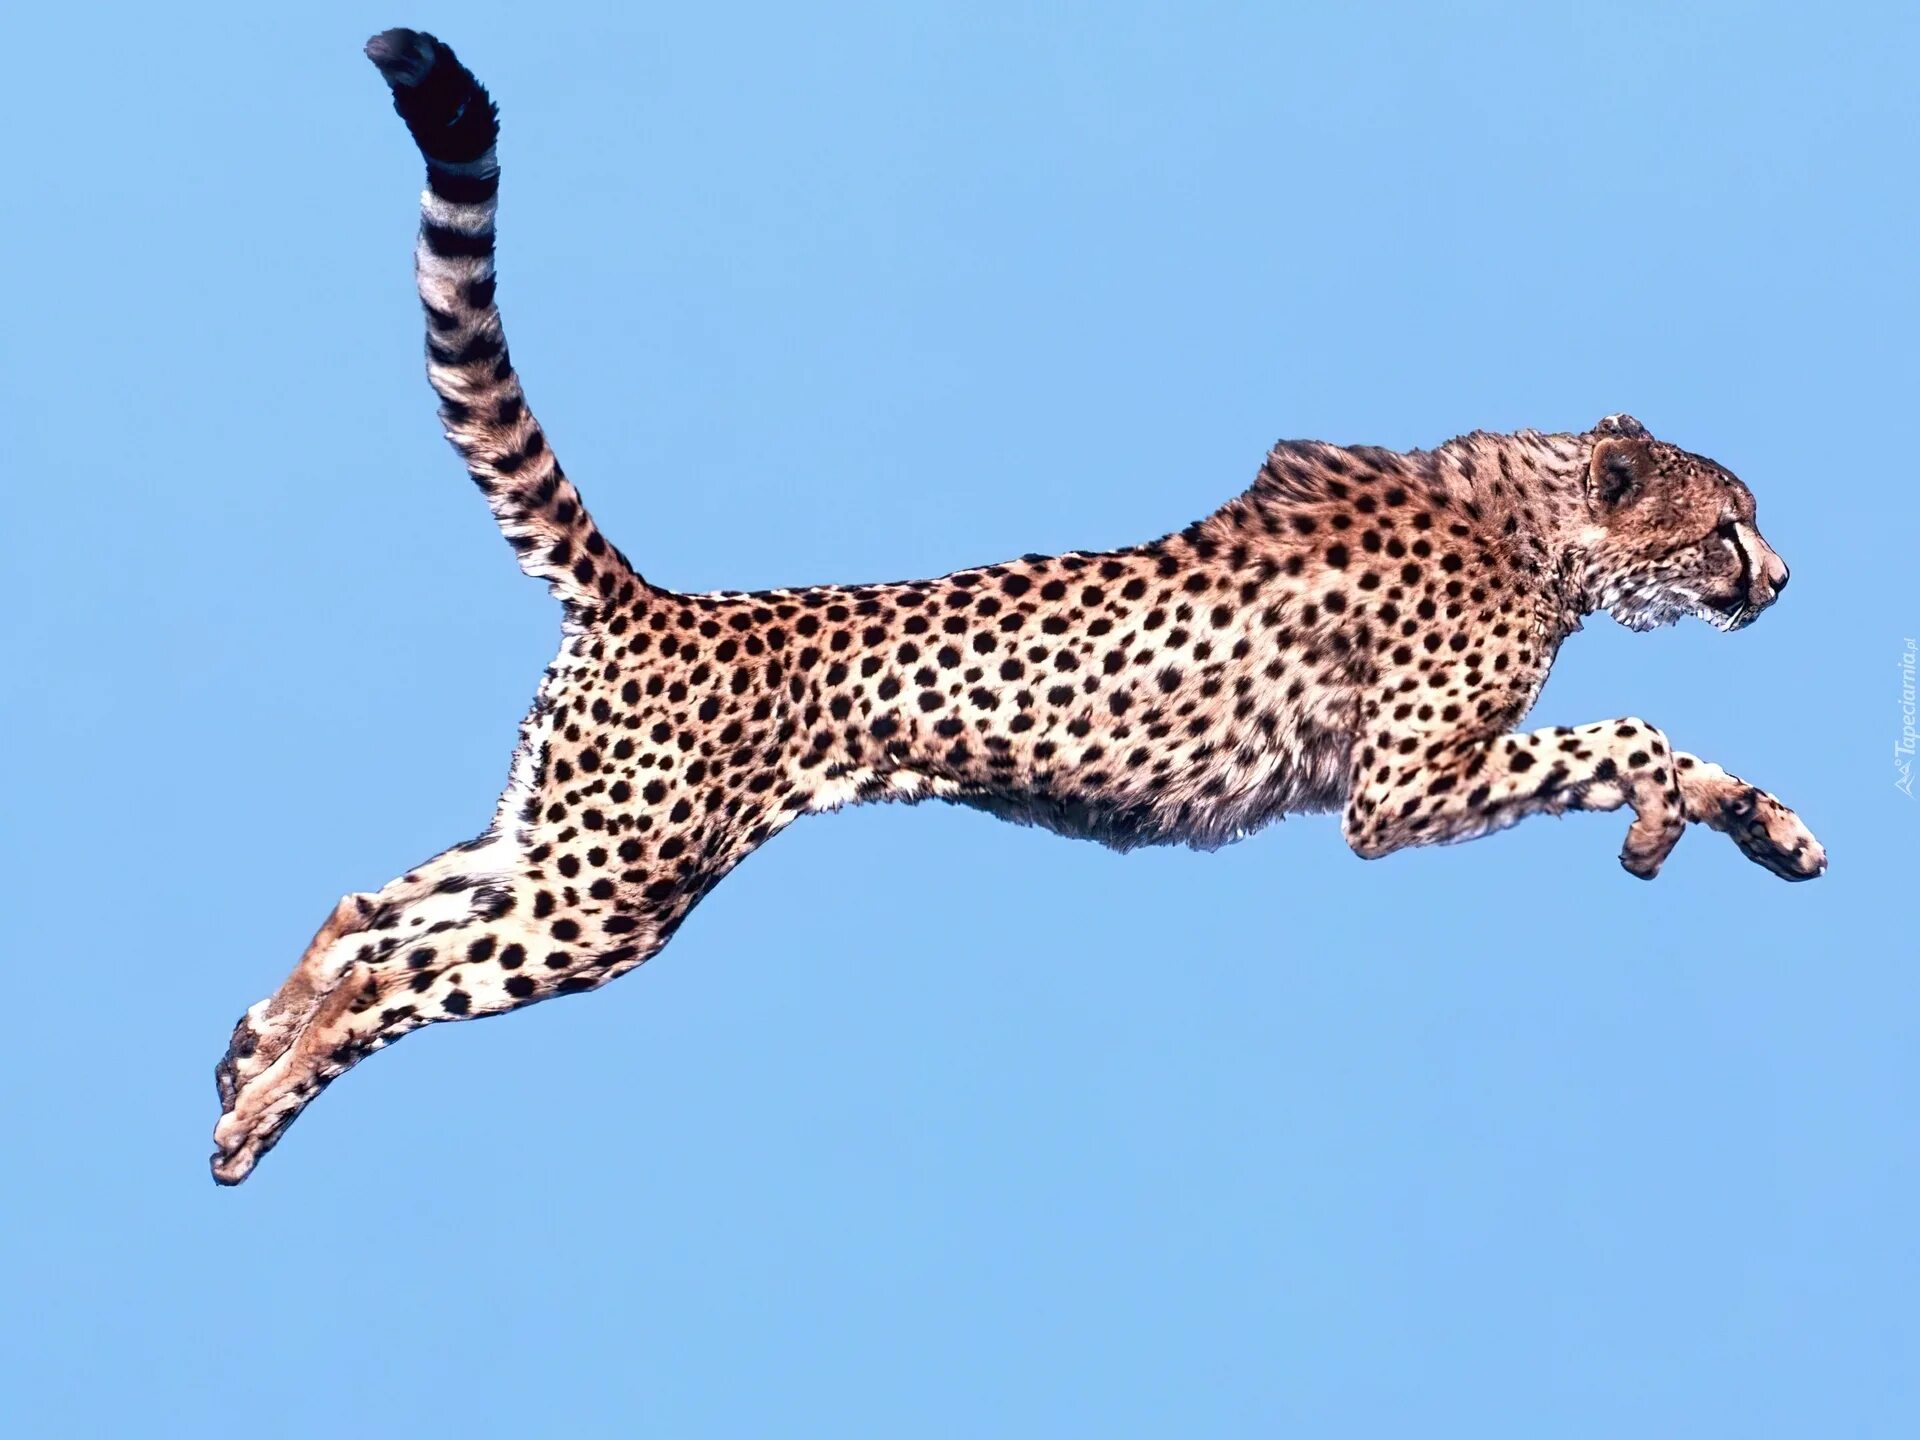 Бегун животное. Гепард леопард Ягуар. Леопард и гепард Ягуар скорость. Африканский гепард. Скорость леопарда и гепарда.